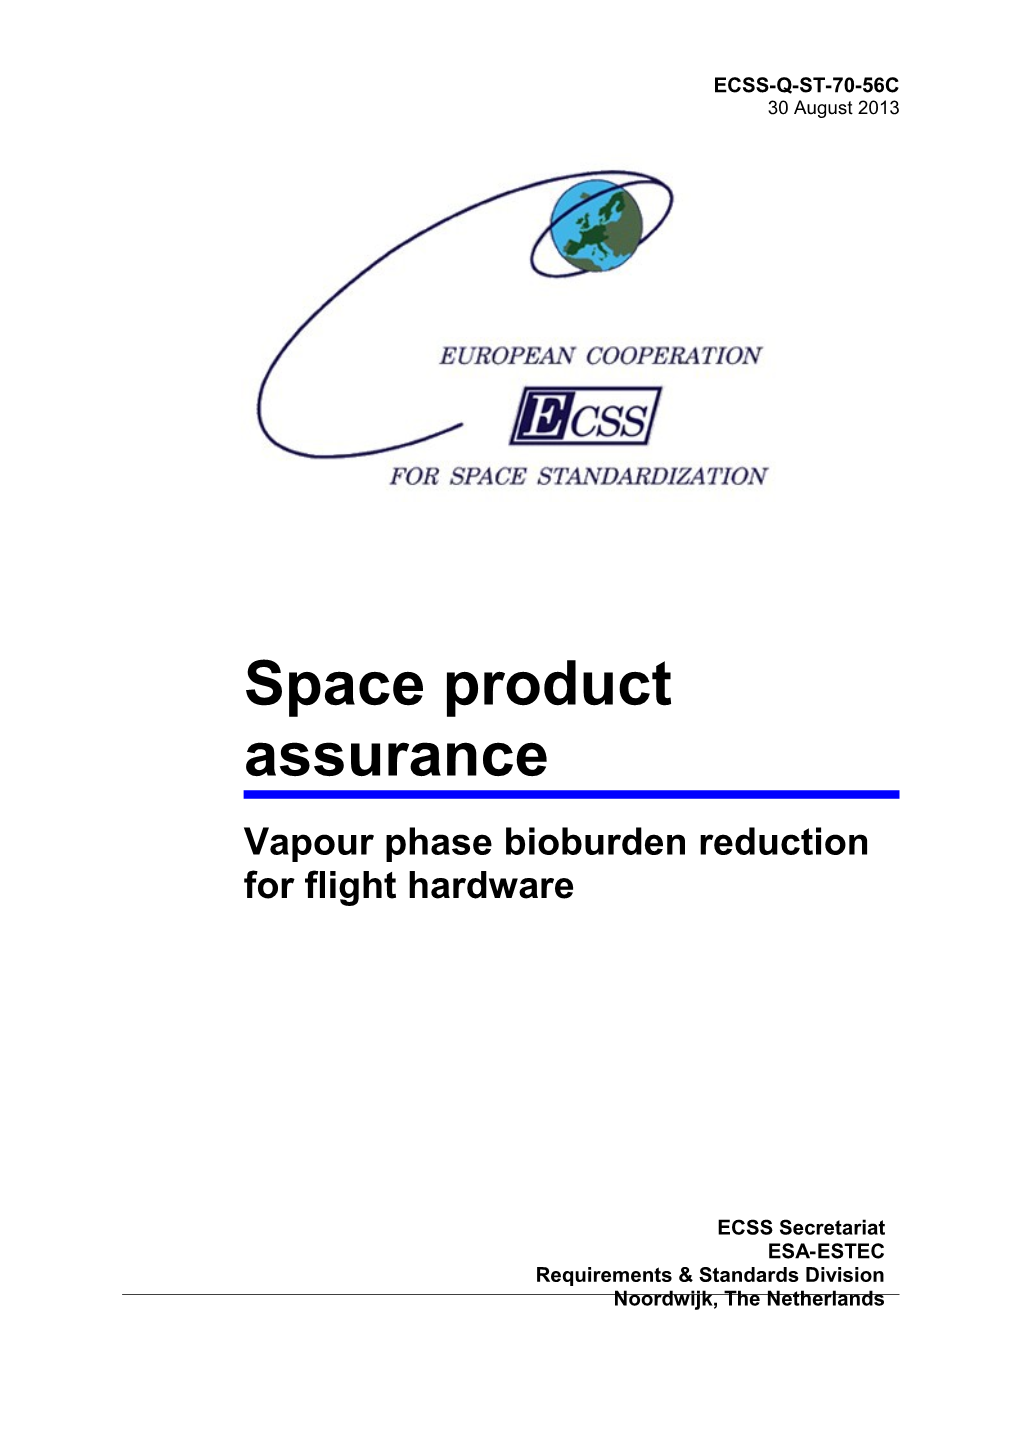 Vapour Phase Bioburden Reduction for Flight Hardware